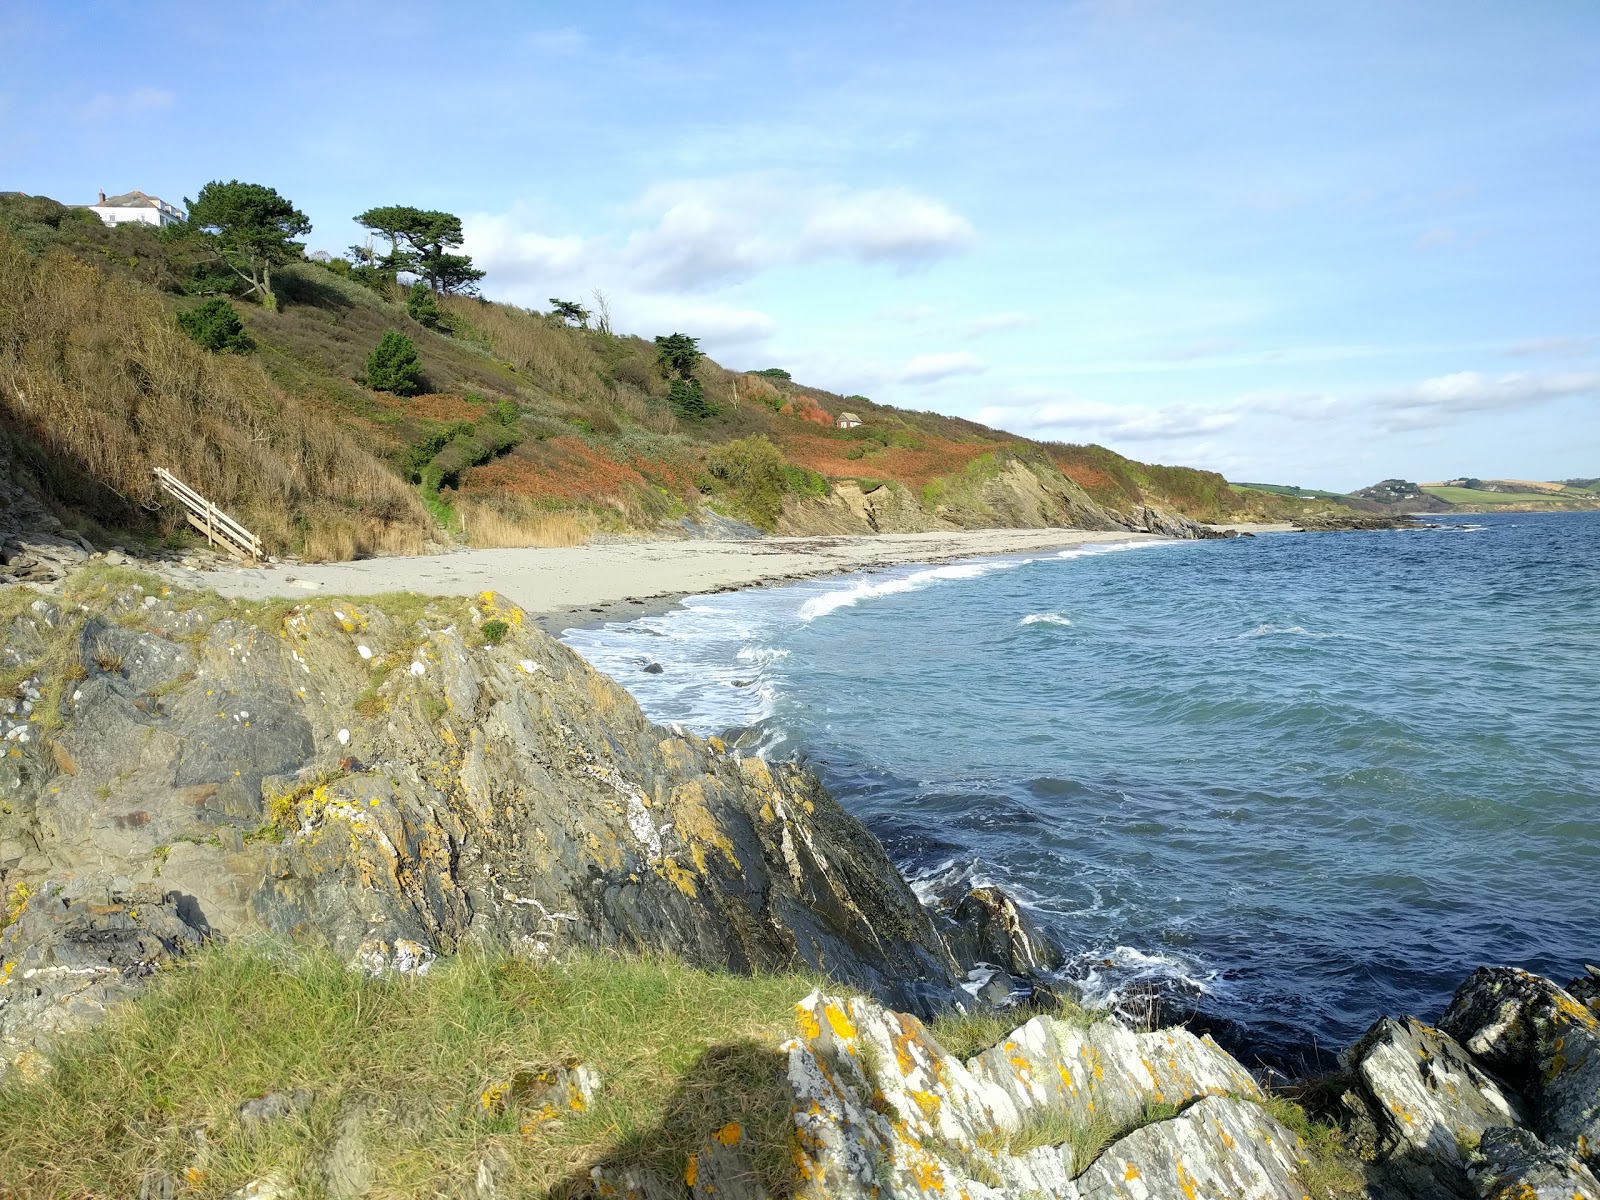 Fotografija Porthbean beach nahaja se v naravnem okolju